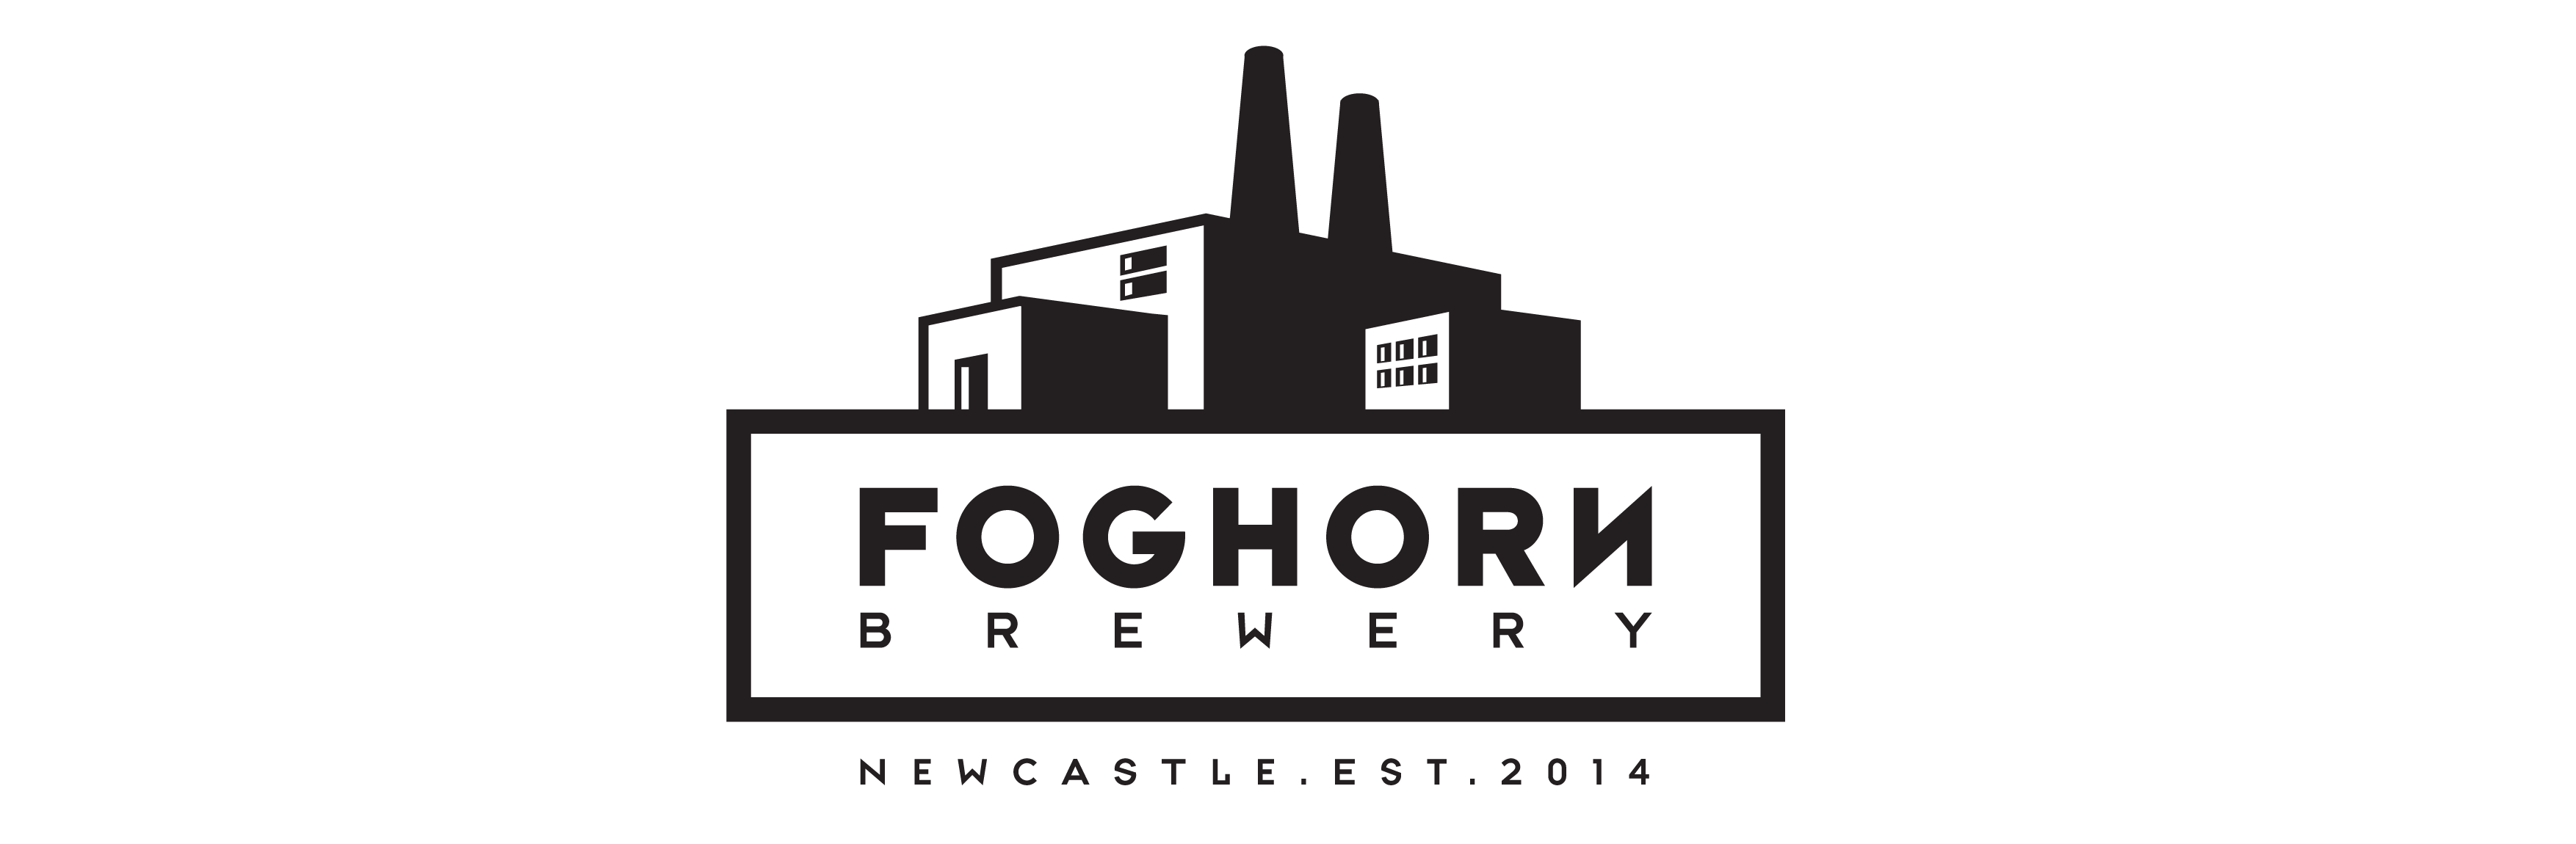 FogHorn Brewery Newcastle